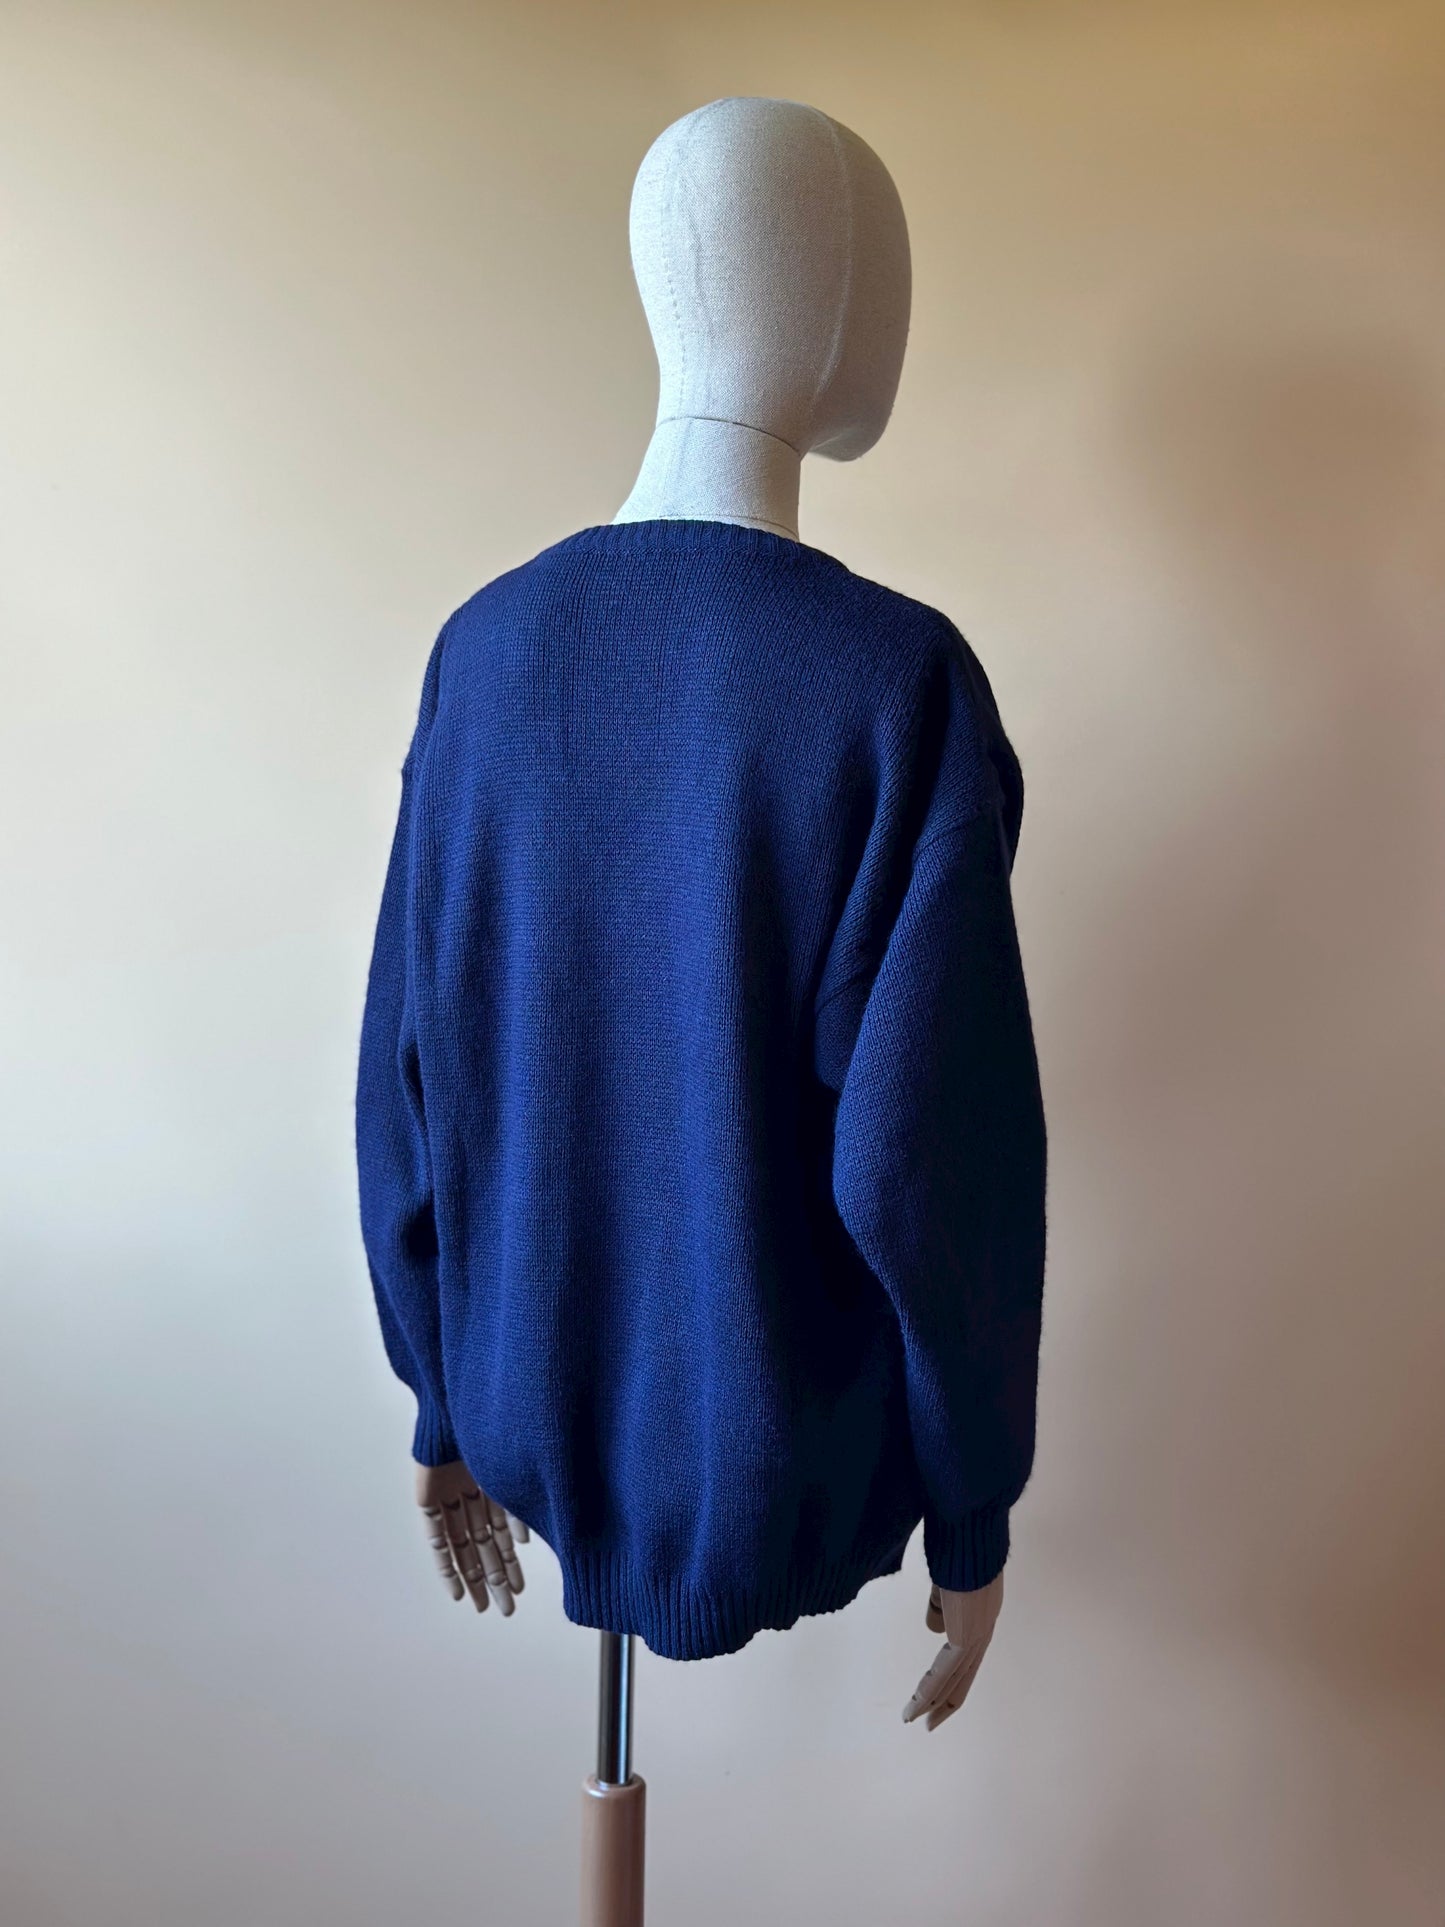 Vintage Blue Woolen Sweater